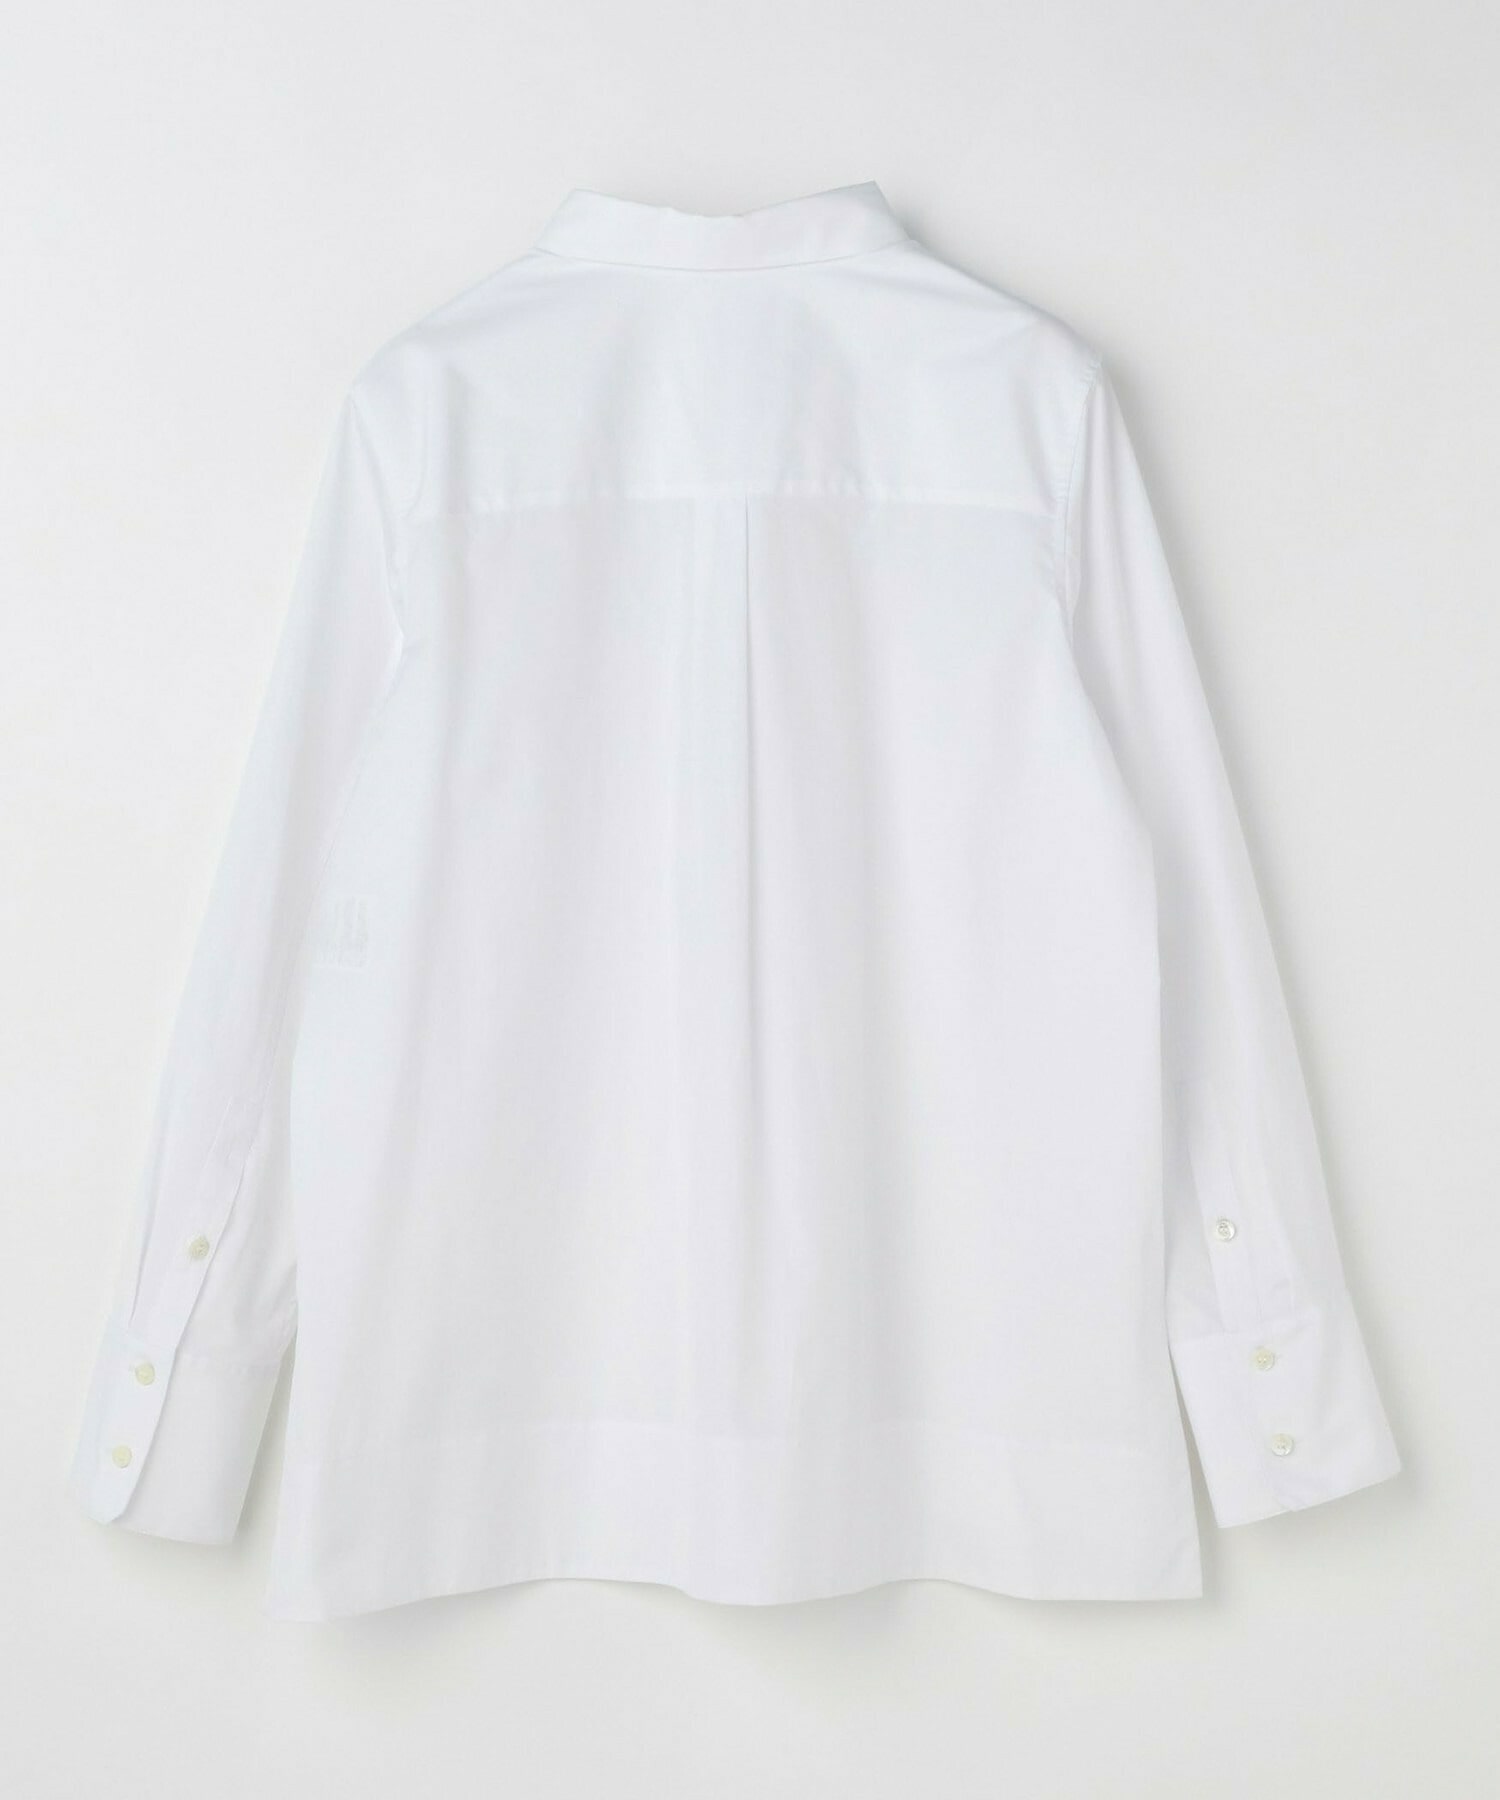 【L'EQUIPE】【Lサイズ】120/2ブロードシャツ 詳細画像 ホワイト 1